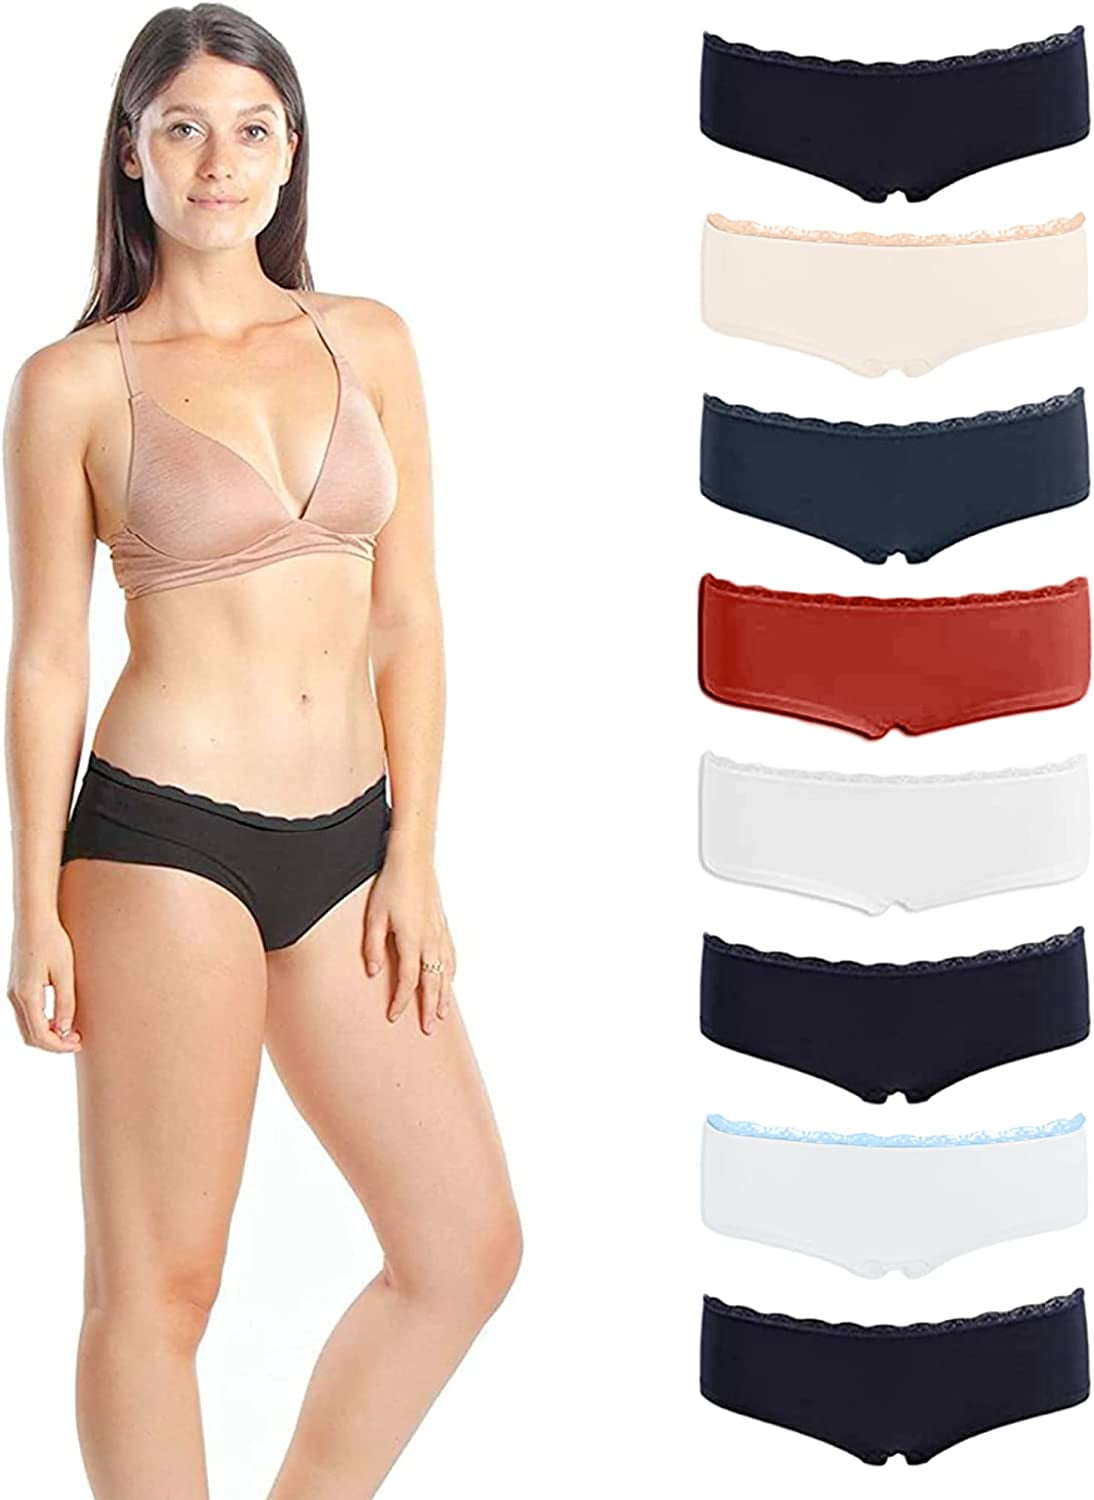 Emprella Women's Boyshort Panties Comfort Ultra-Soft Cotton - Import It All